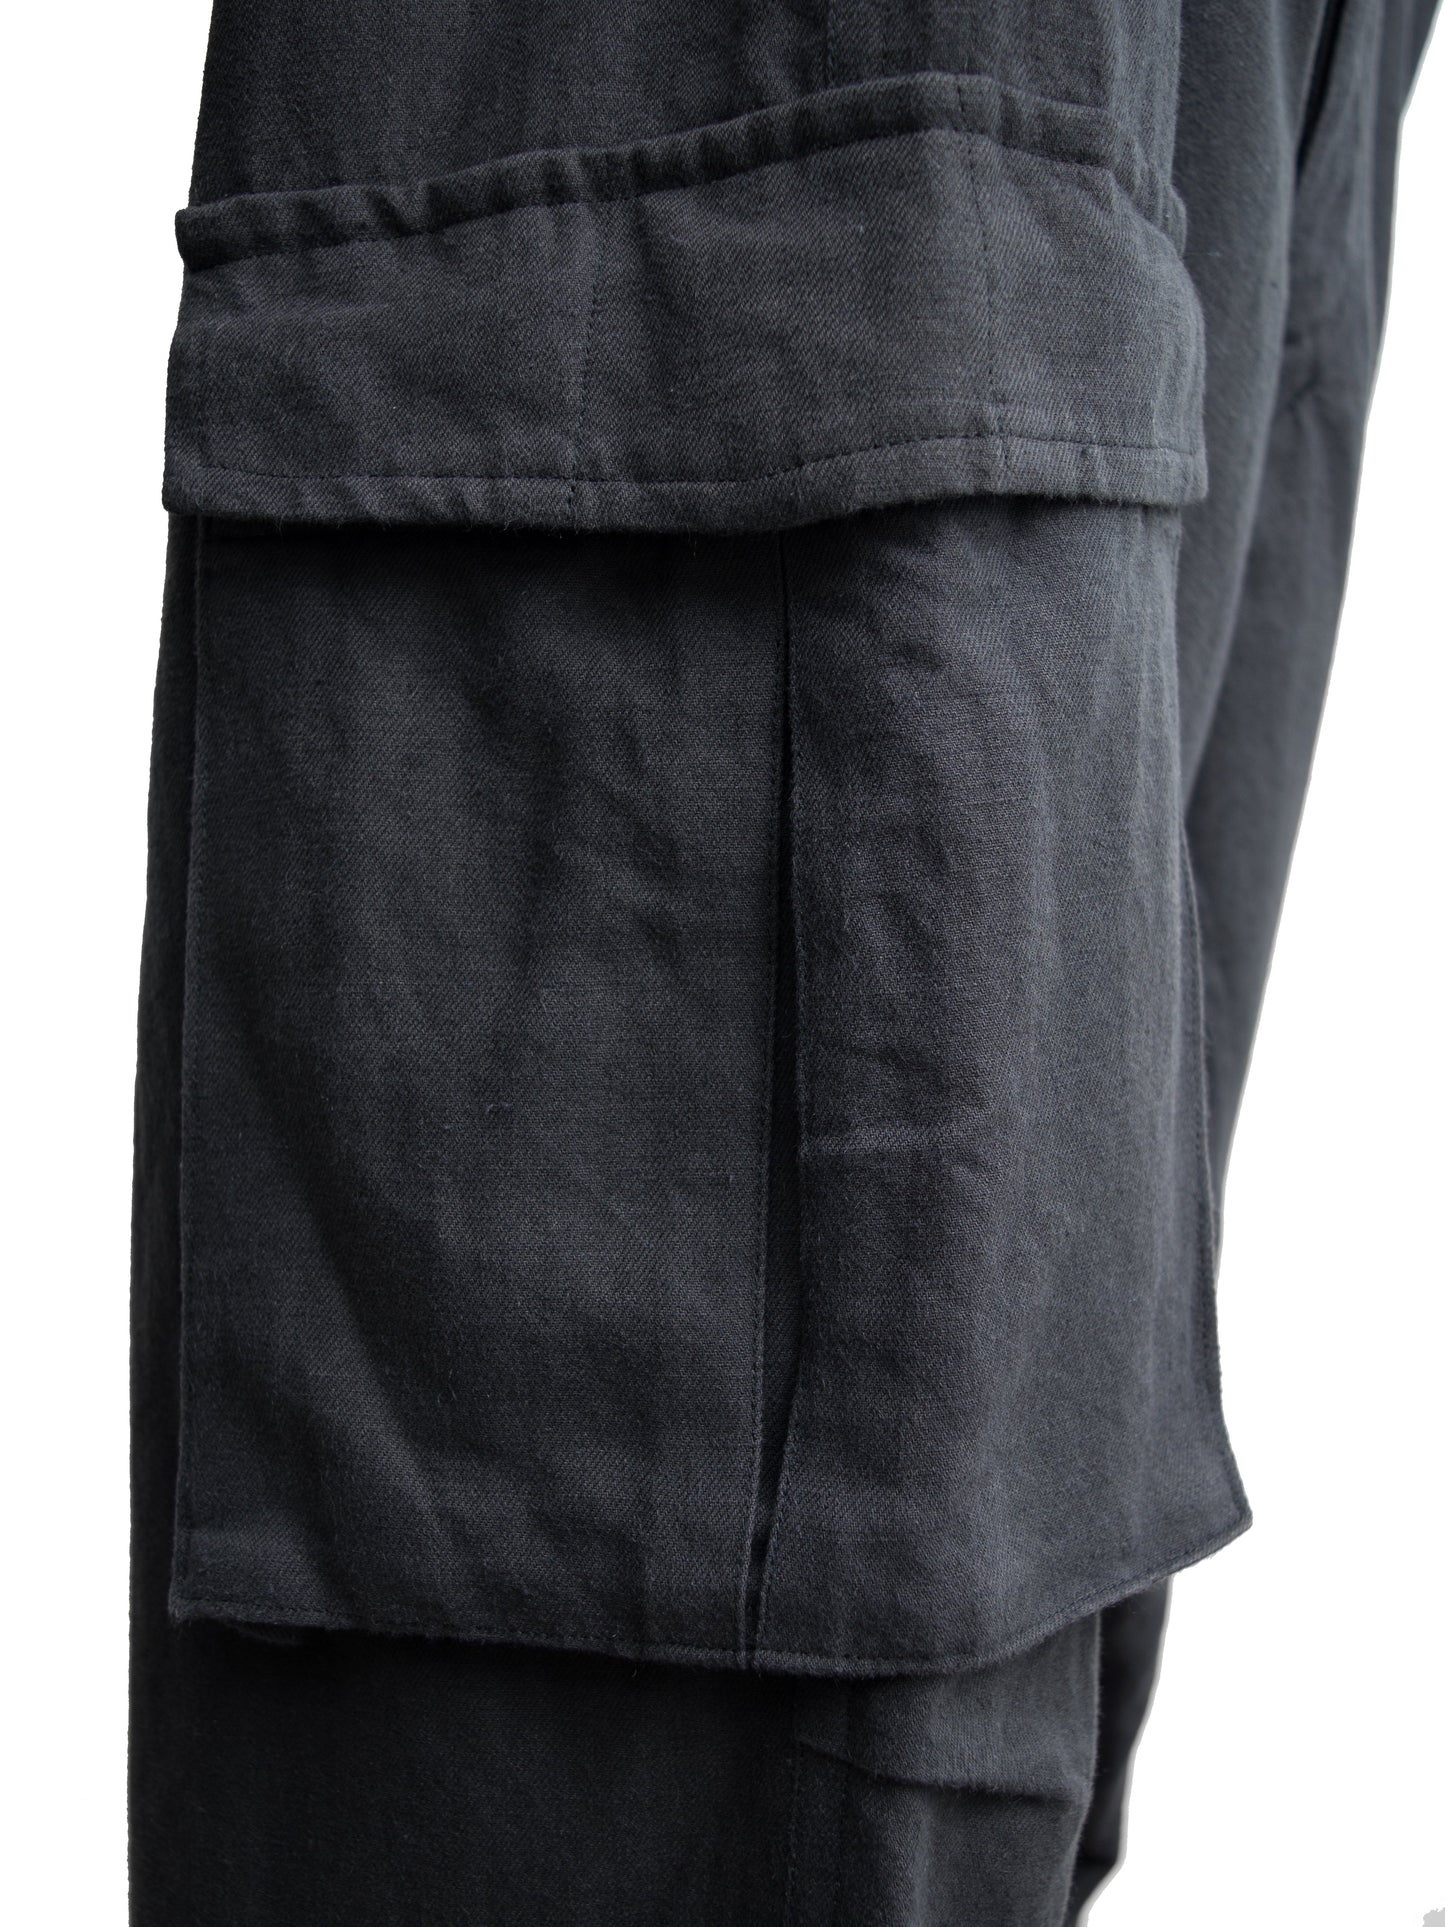 wide cargo pants dark grey ∙ linen cotton ∙ small